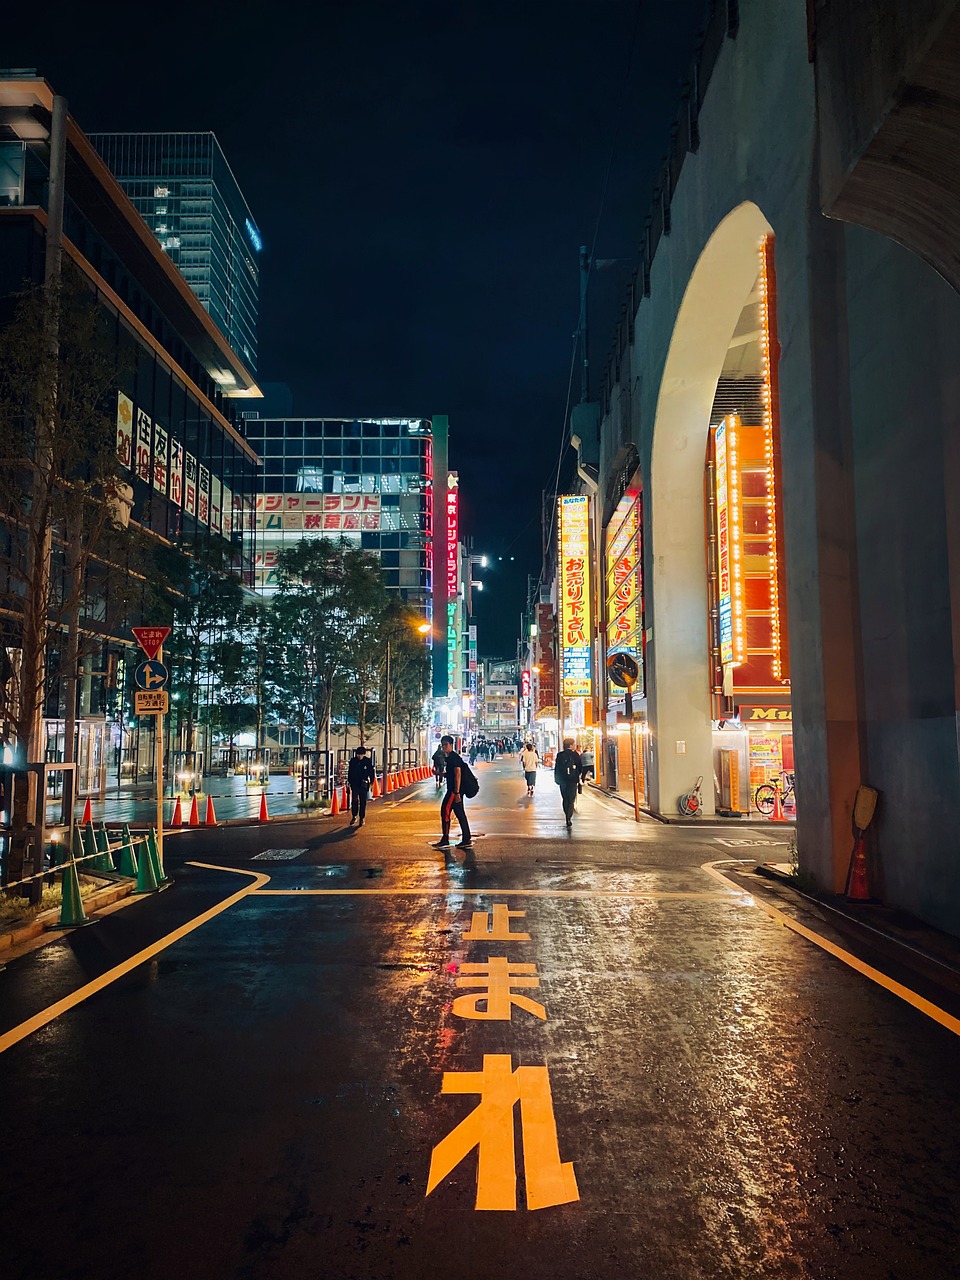 5-day trip to Akihabara: Exploring Tokyo's Electric Town